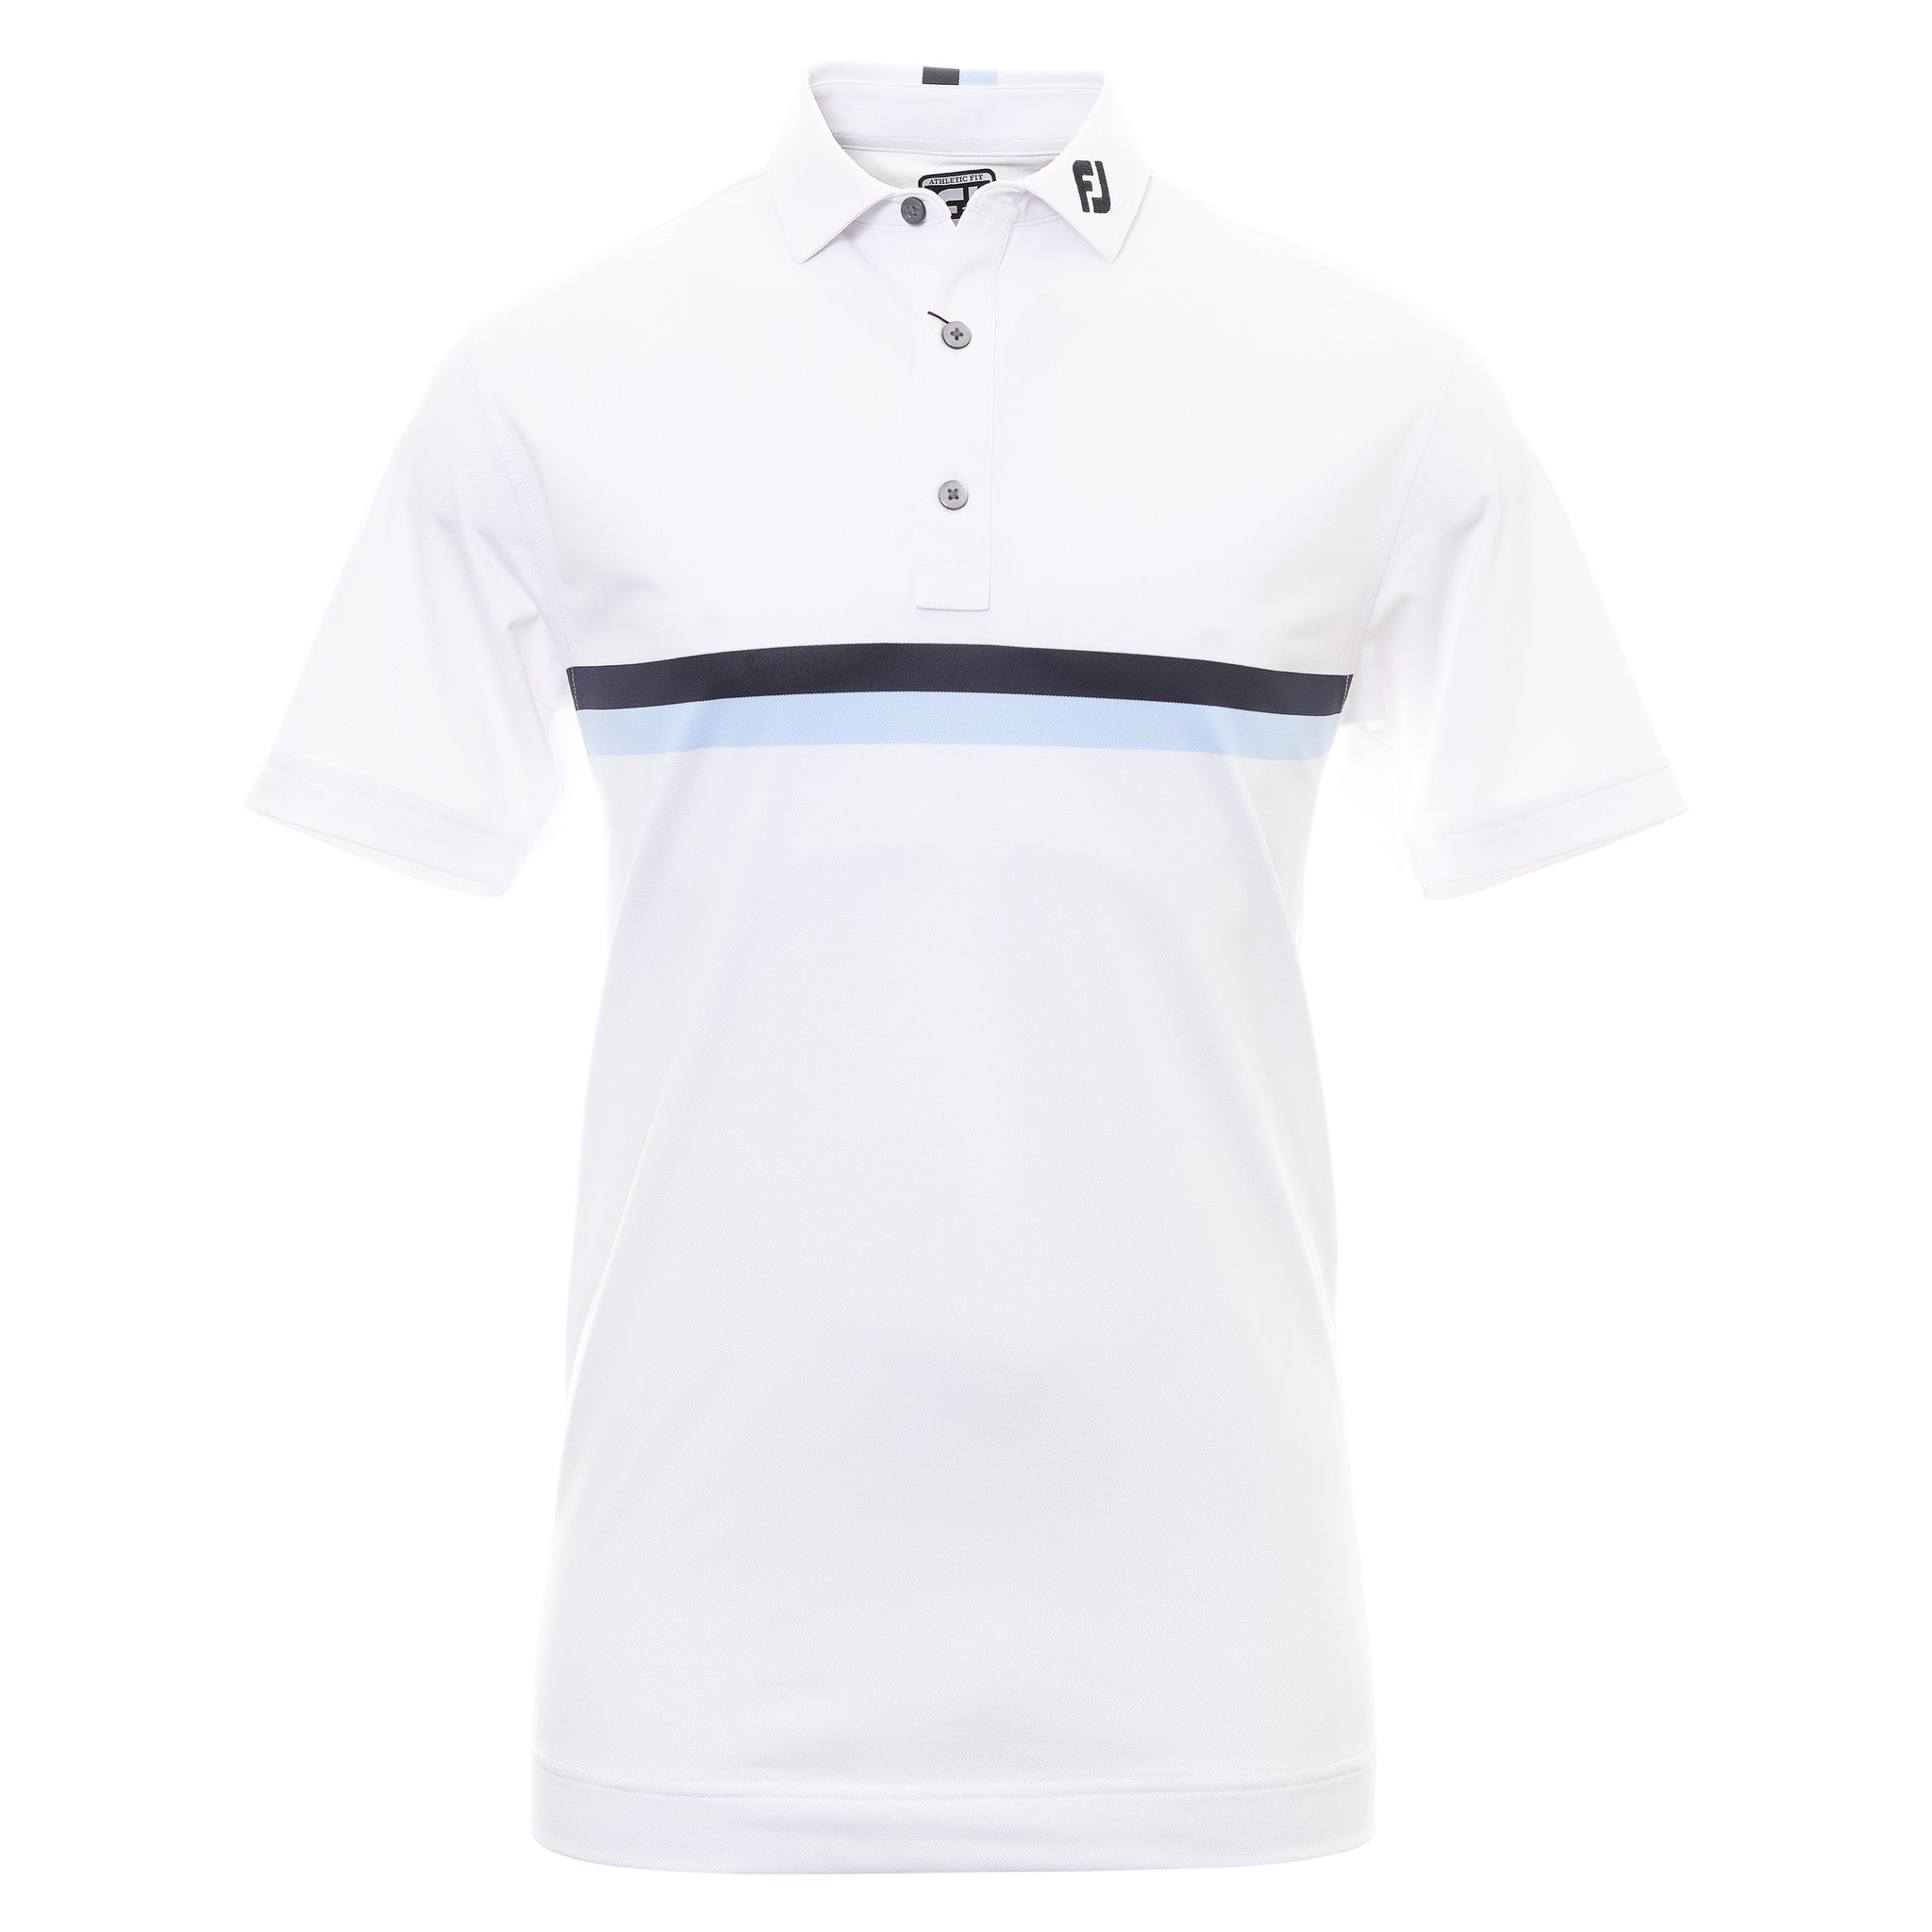 FootJoy Double Chest Band Pique Golf Shirt 88443 White Navy Light Blue ...